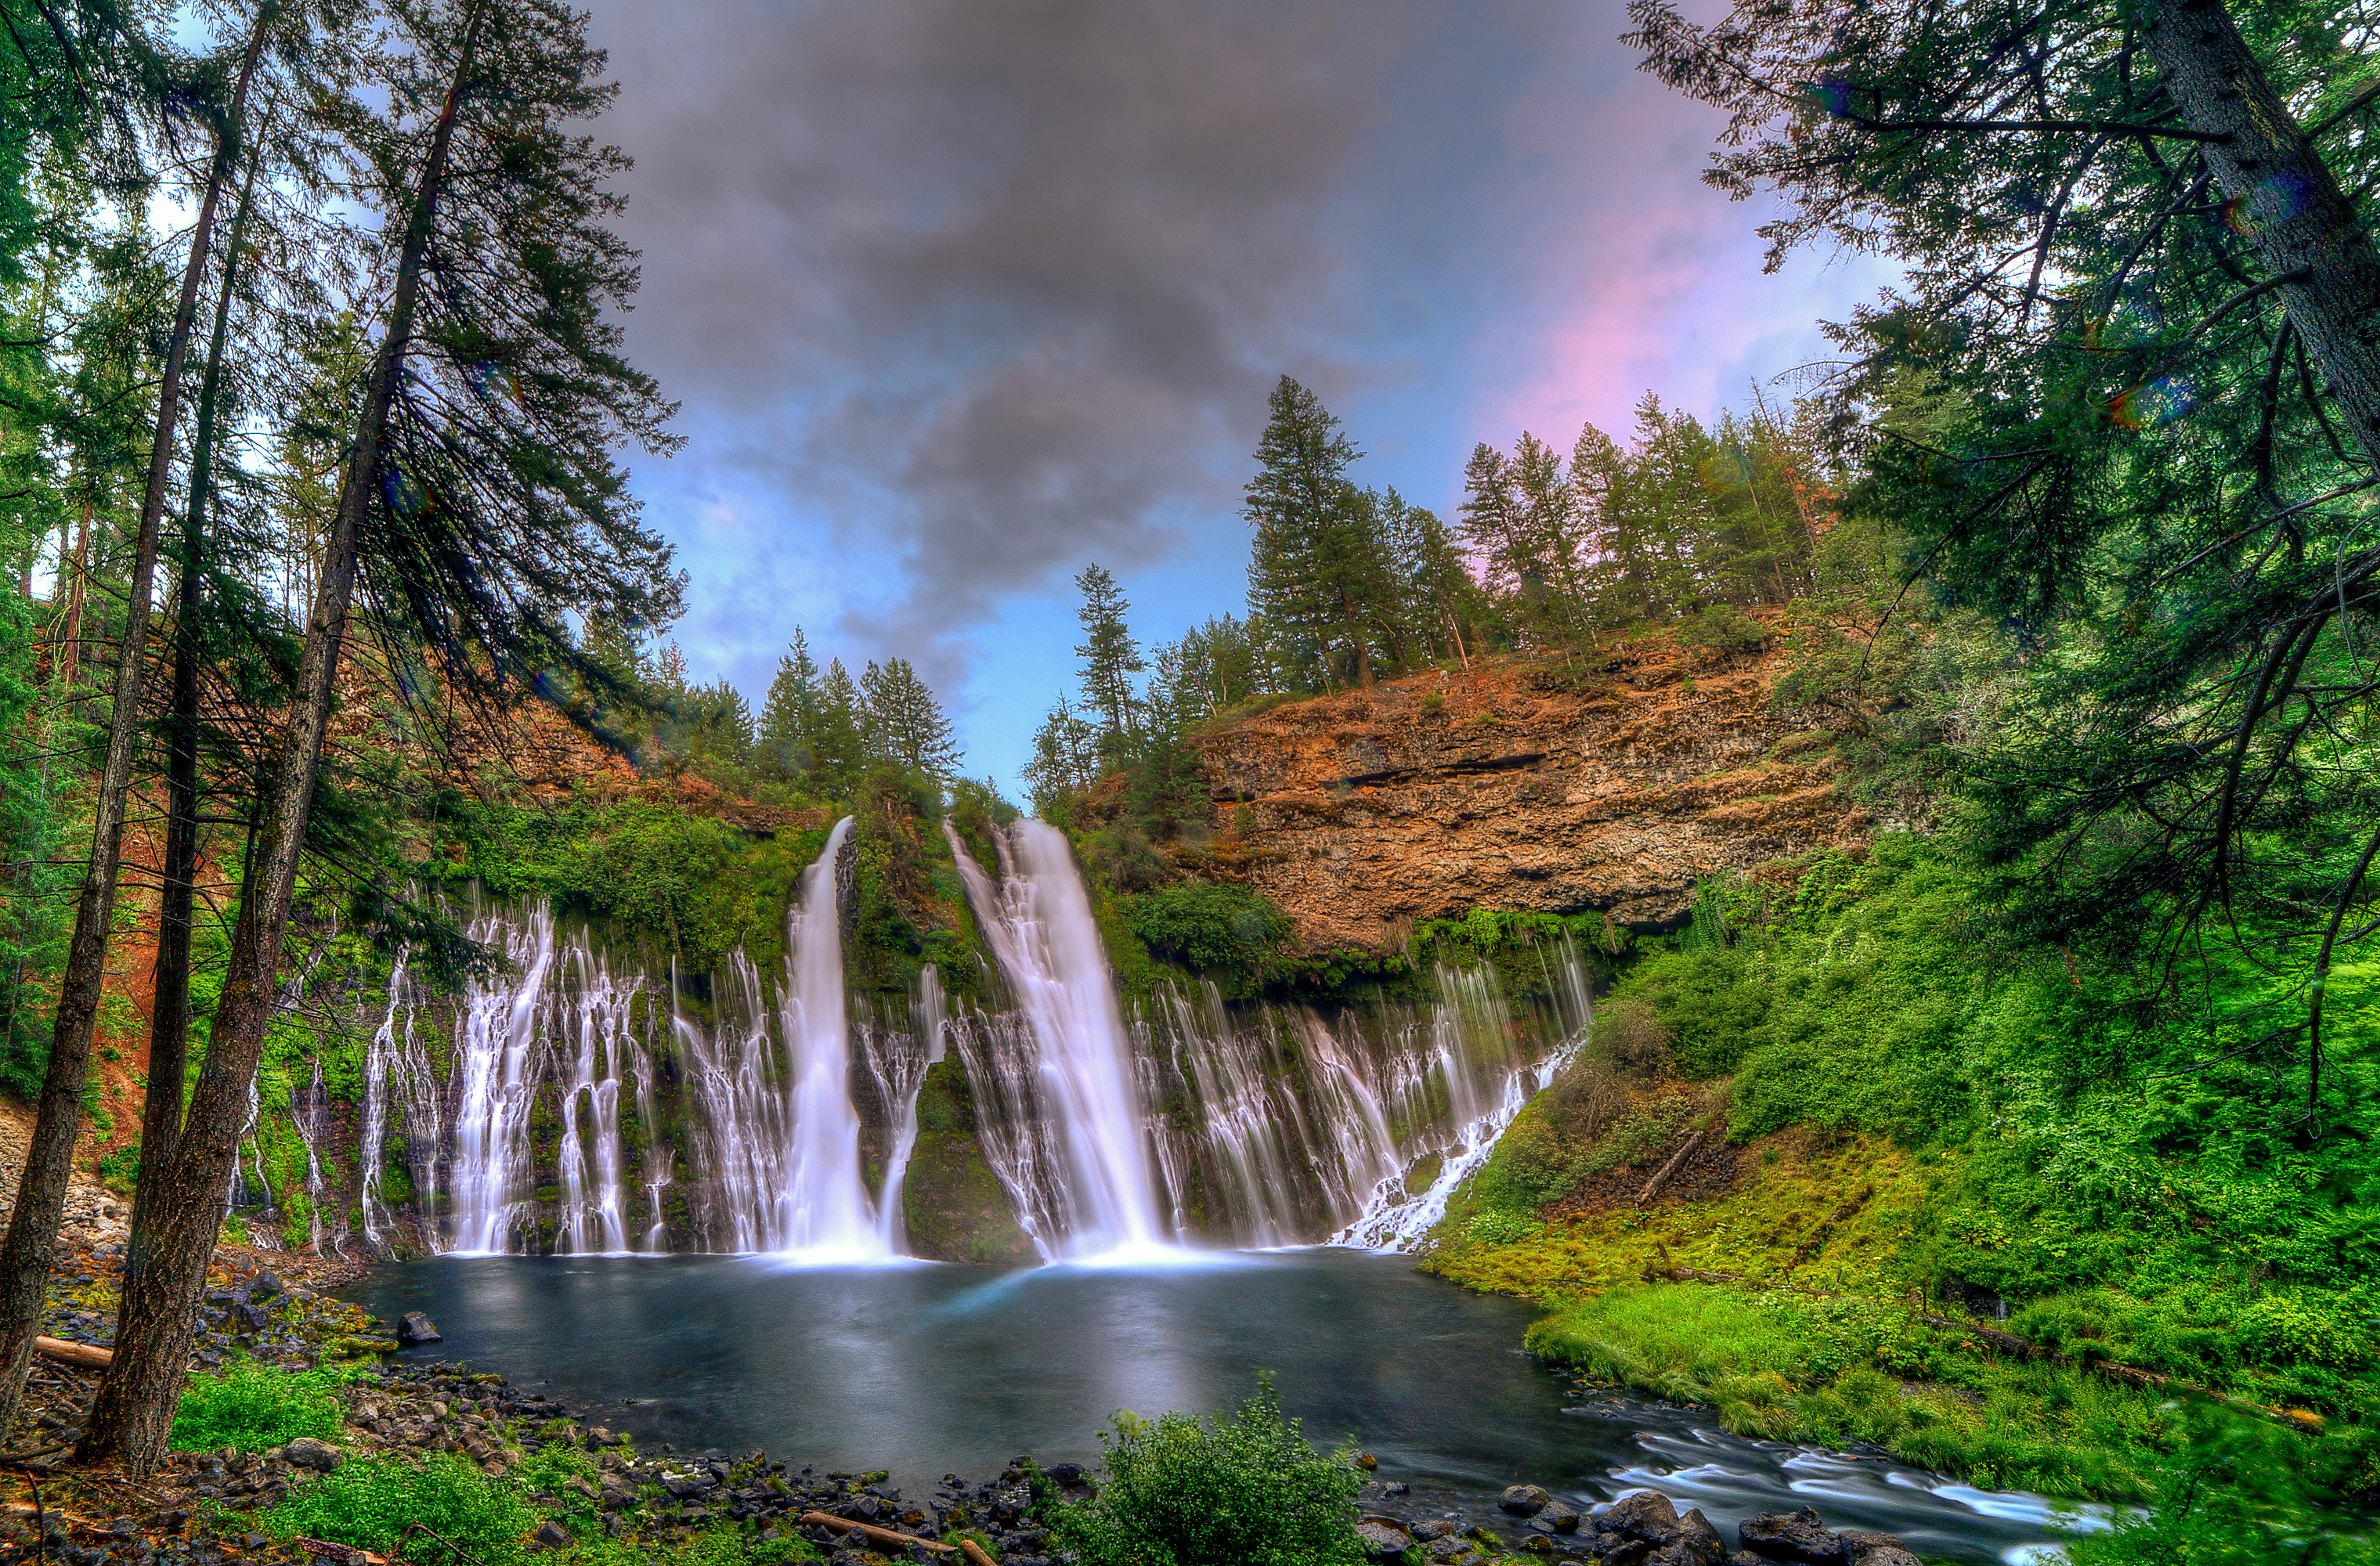 Burney Falls in California by Beau Rogers